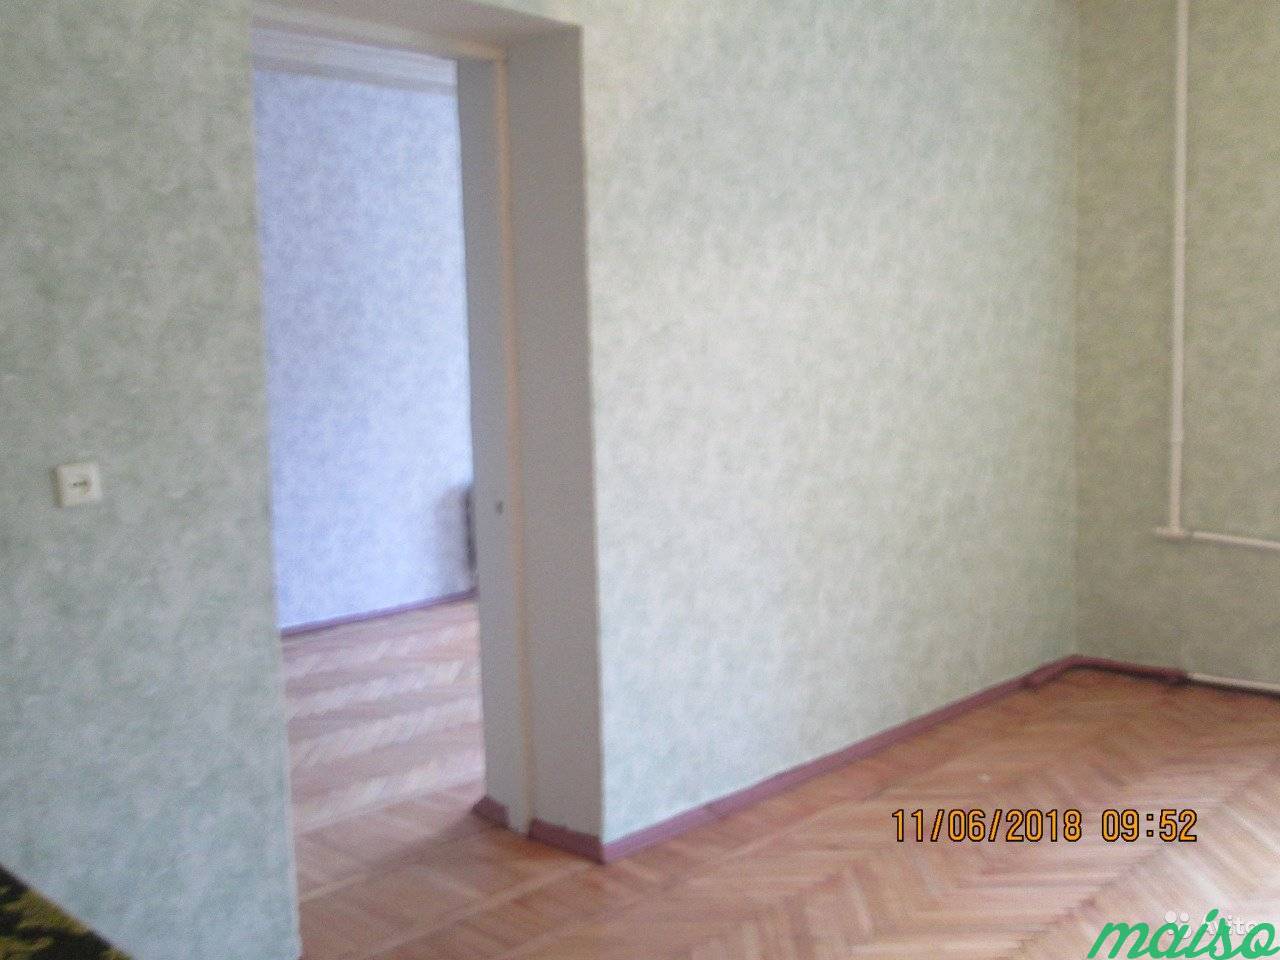 Комната 38 м² в 5-к, 1/5 эт. в Санкт-Петербурге. Фото 1